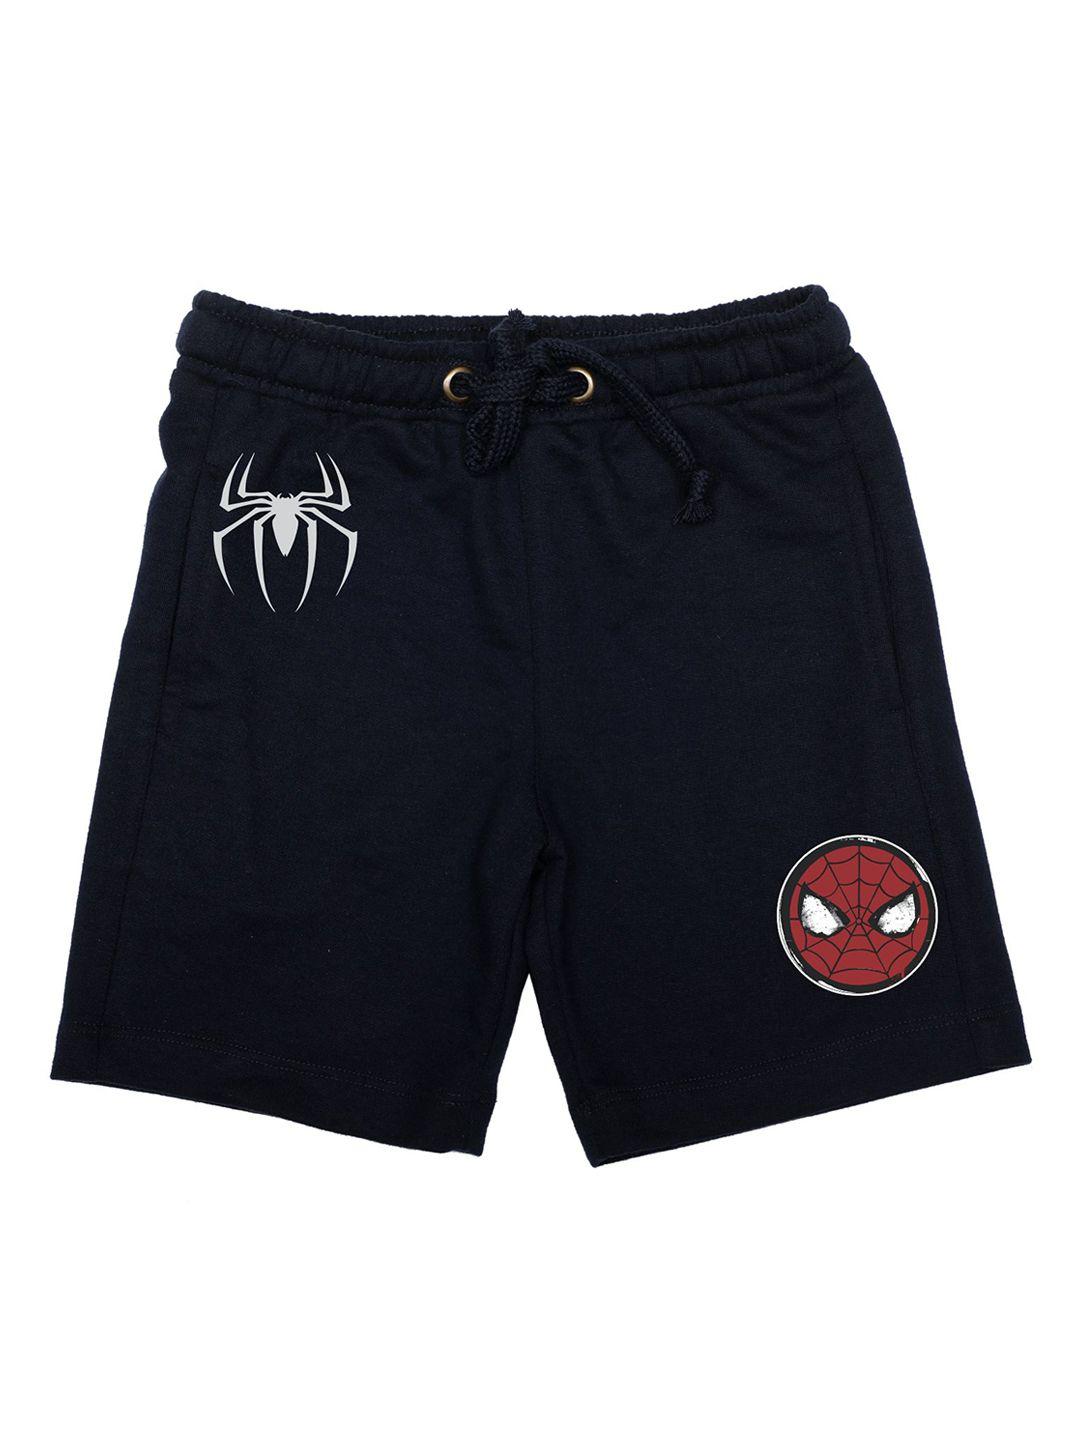 marvel by wear your mind boys navy blue spiderman printed regular fit regular shorts